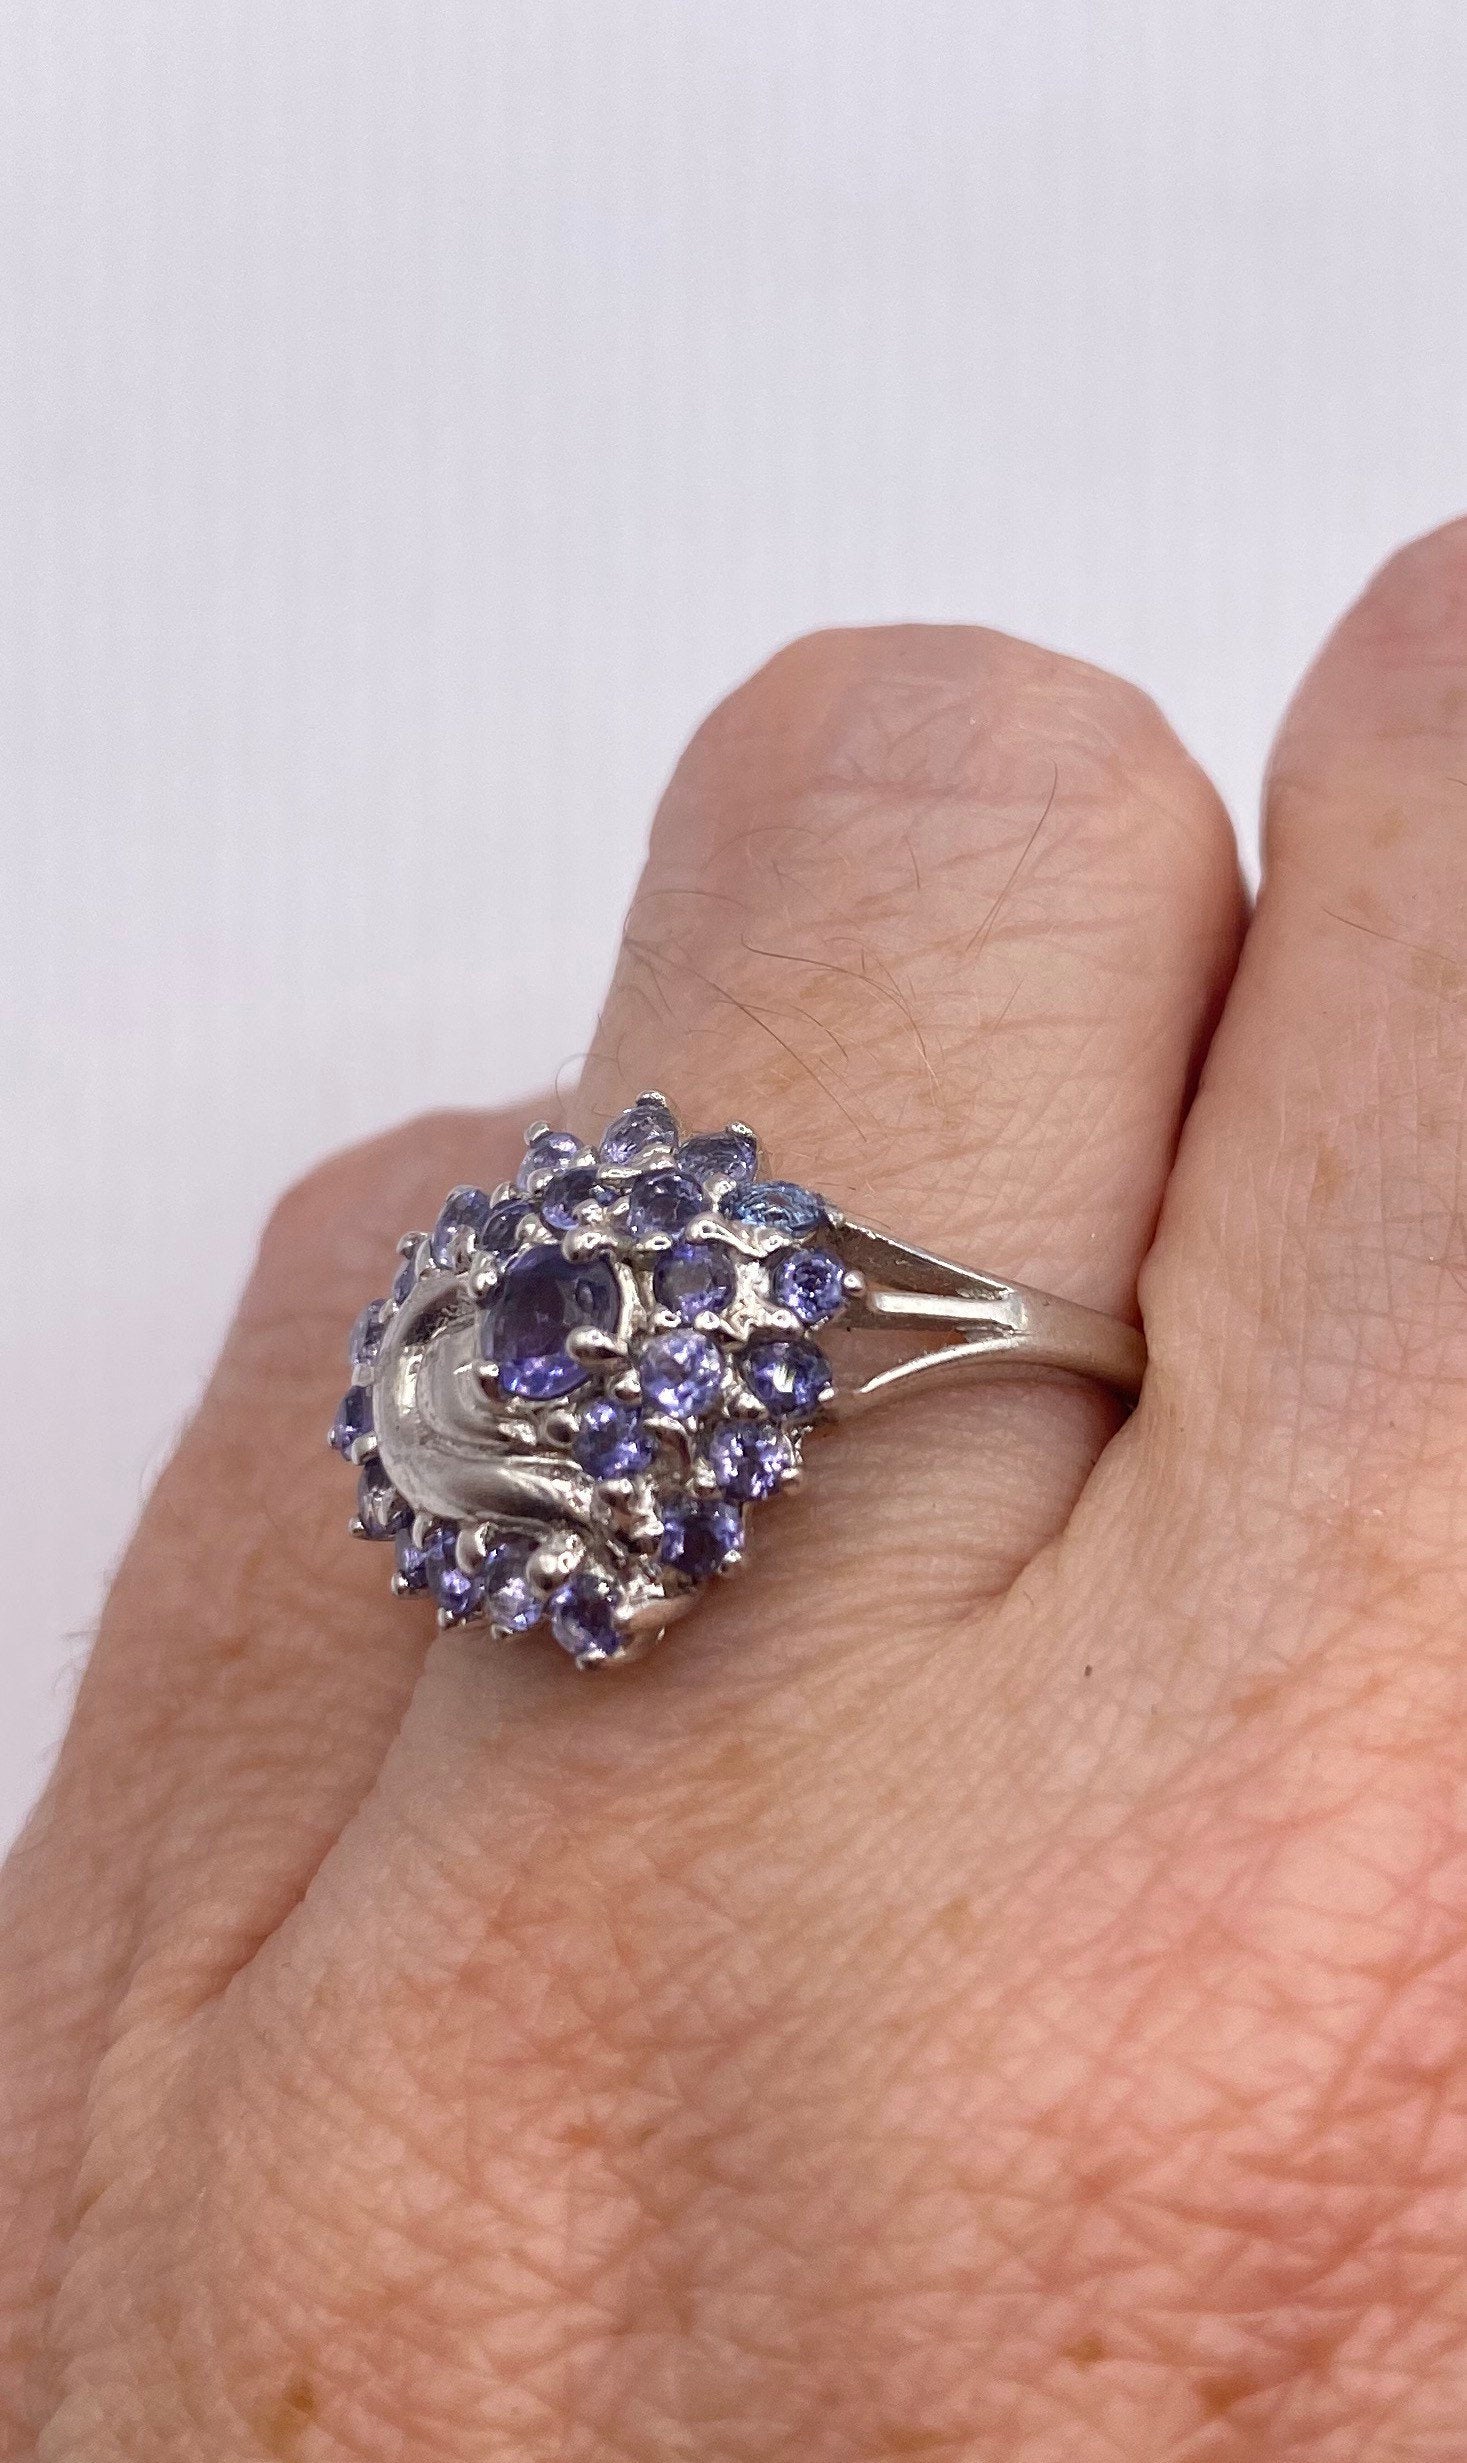 Vintage Blue Iolite Ring in 925 Sterling Silver Floral Setting